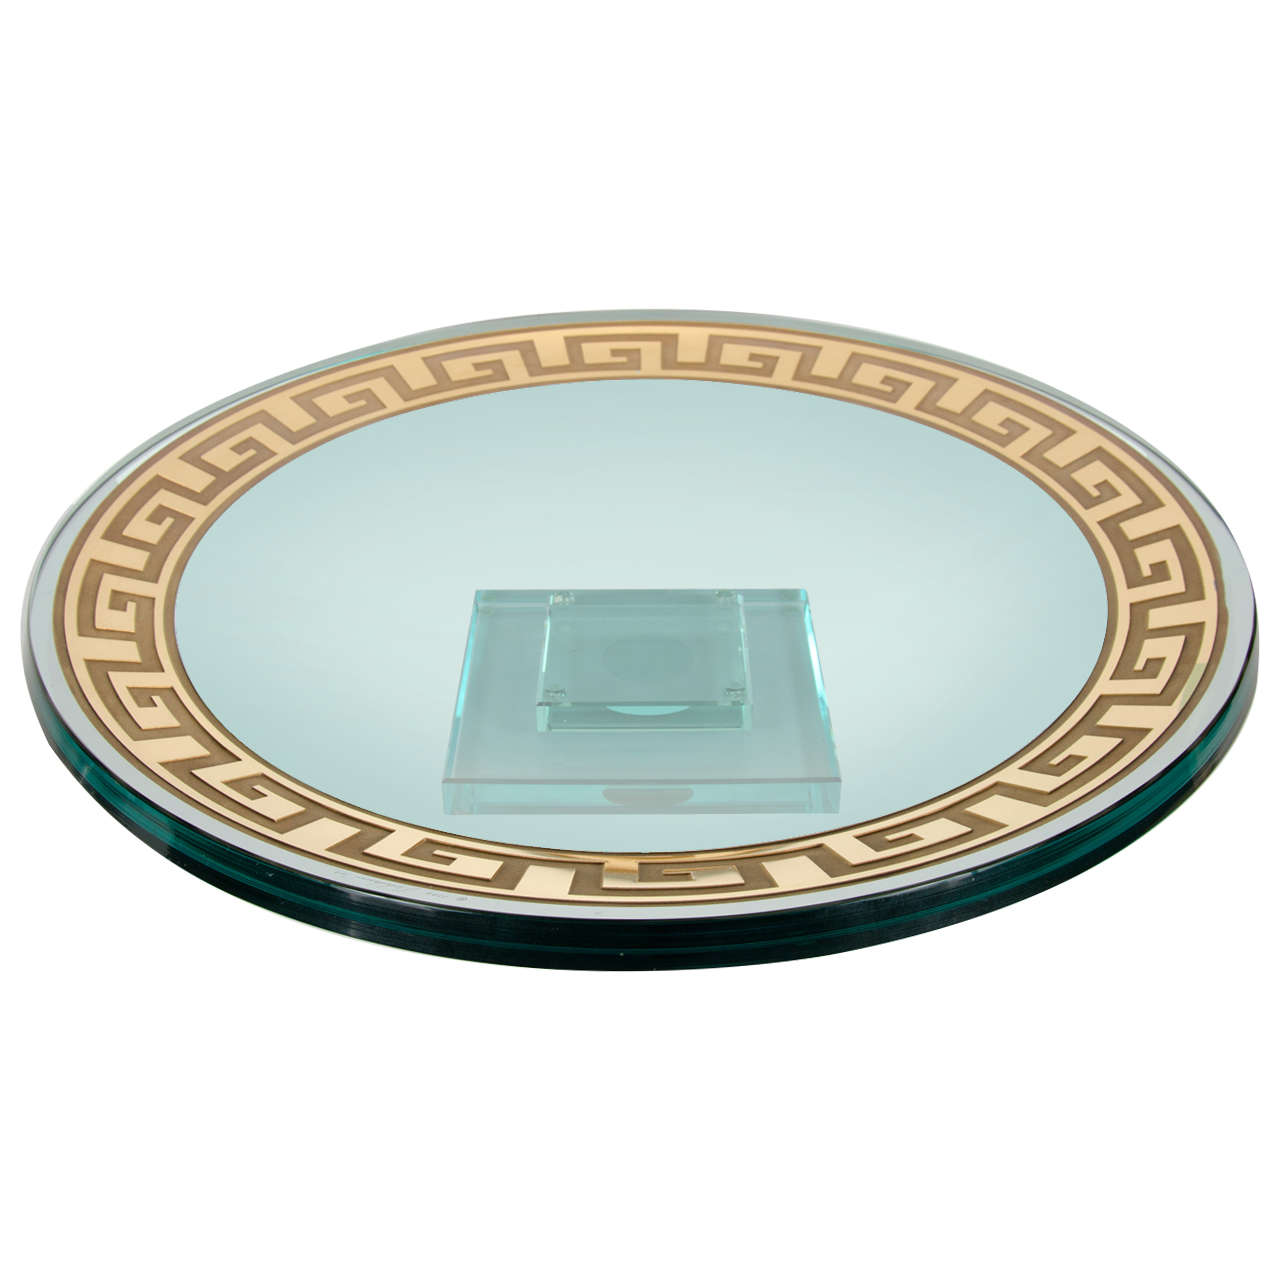 Impressive Signed Art Glass centerpiece Bowl with 24K Gold Greek Key Design